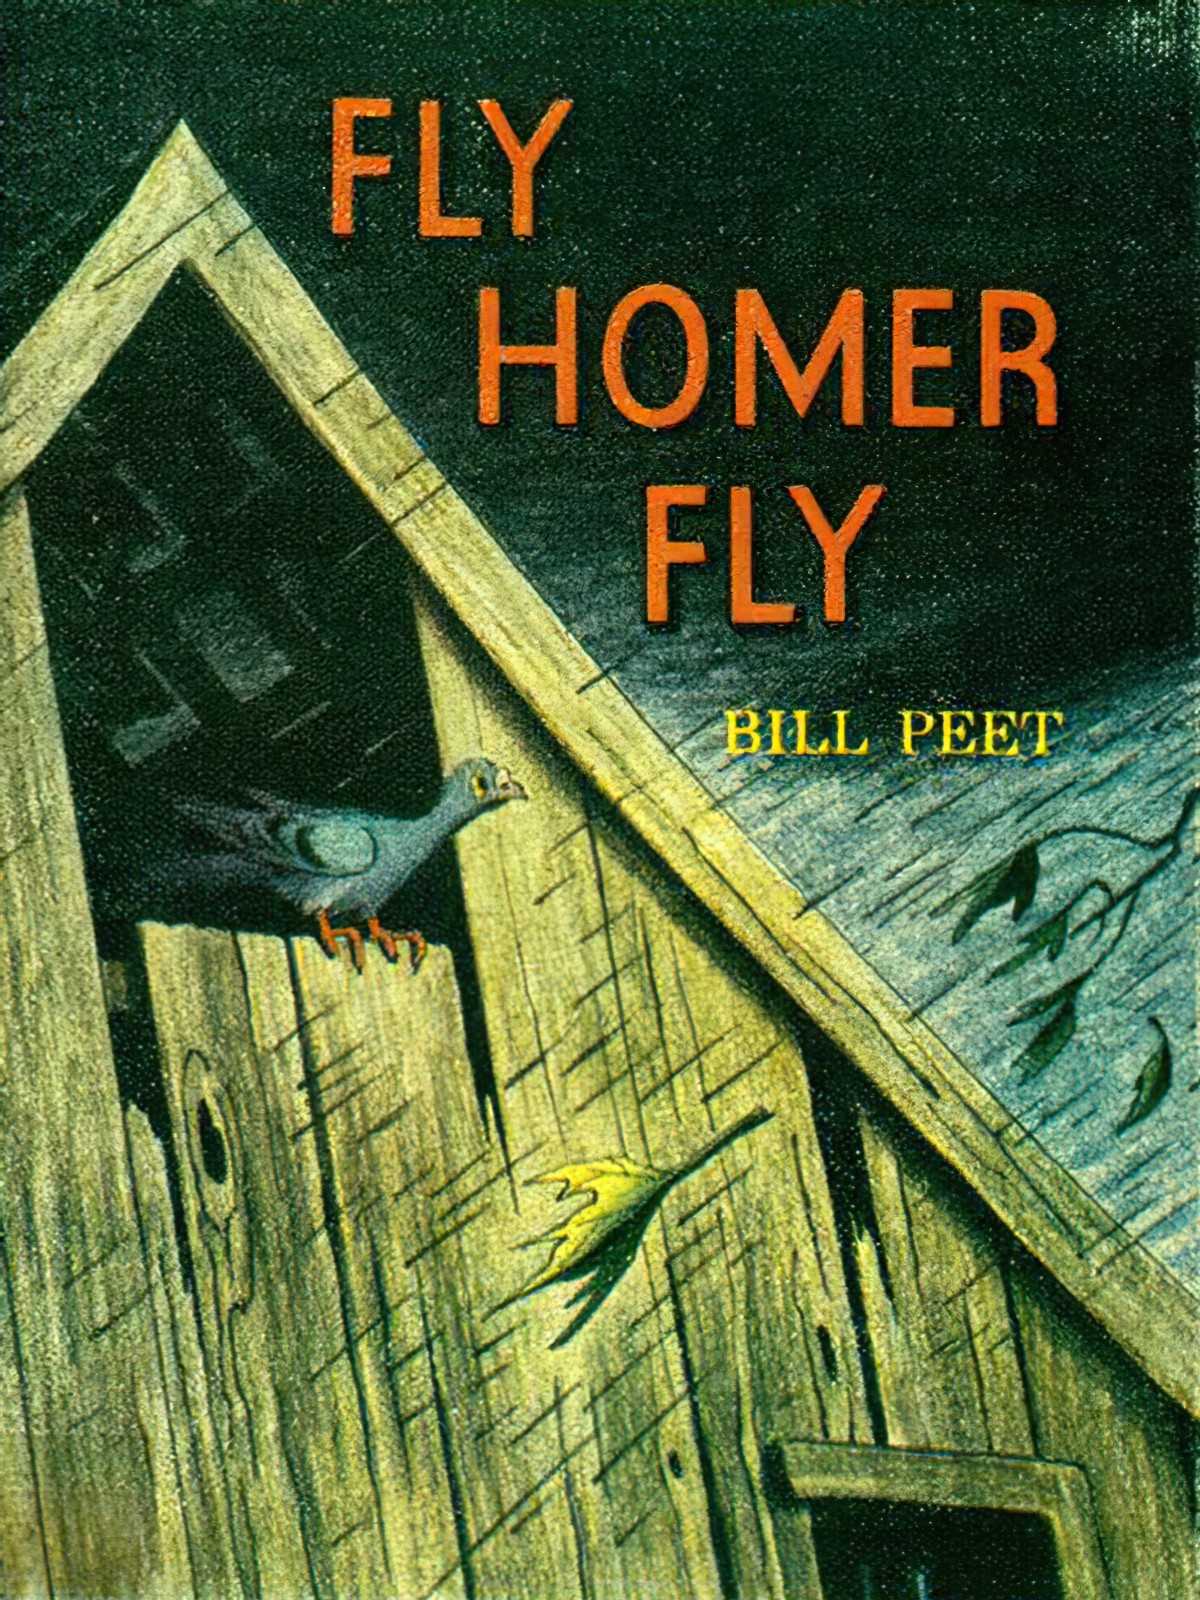 Fly Homer Fly by Bill Peet Analysis